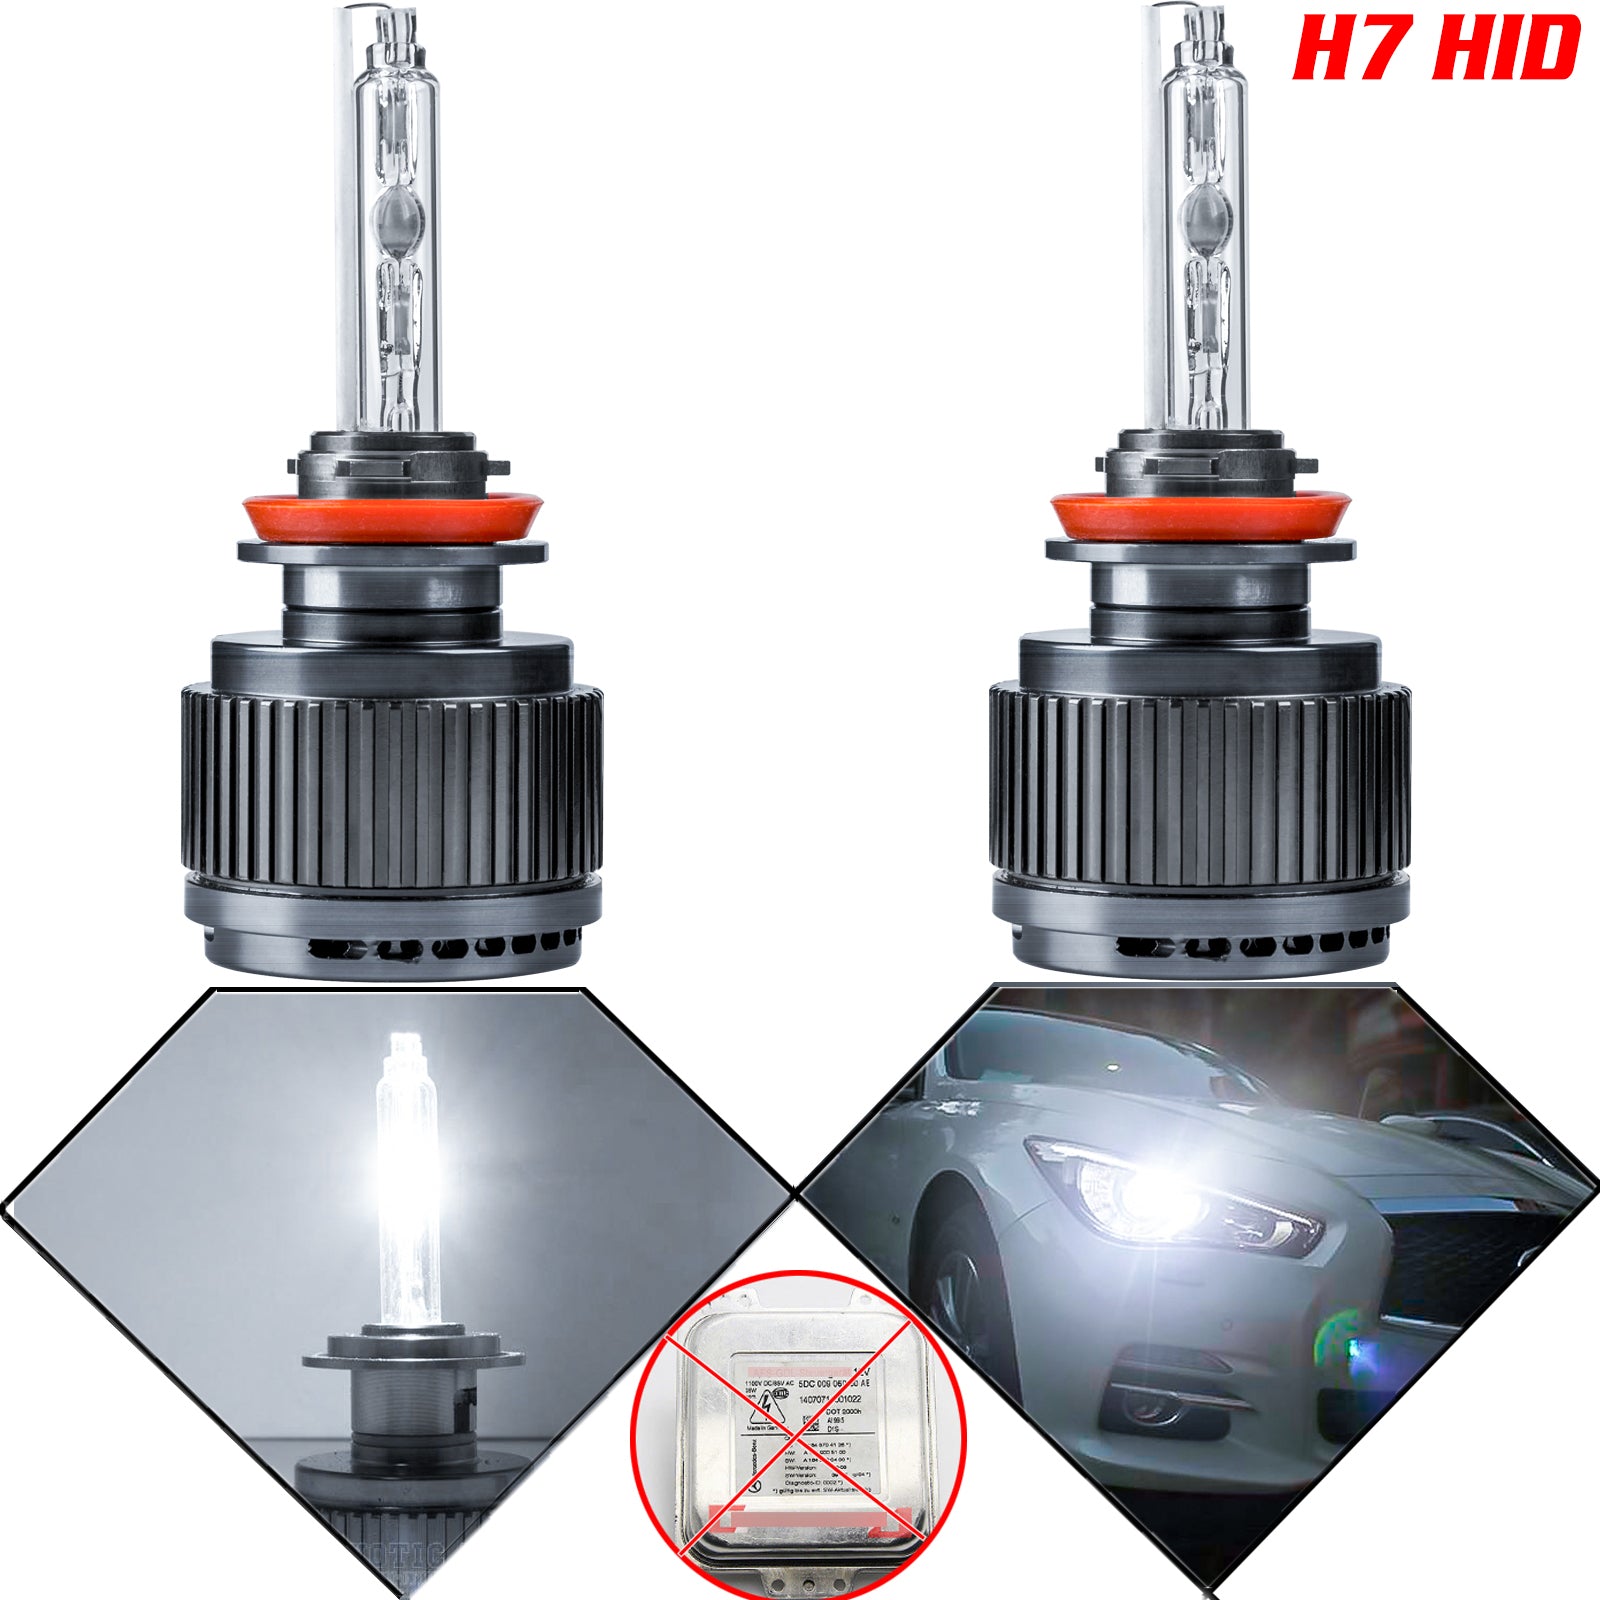 H7 HID 6000K - 7000K Xenon White LED Bulbs For Headlight Lamps | Tech